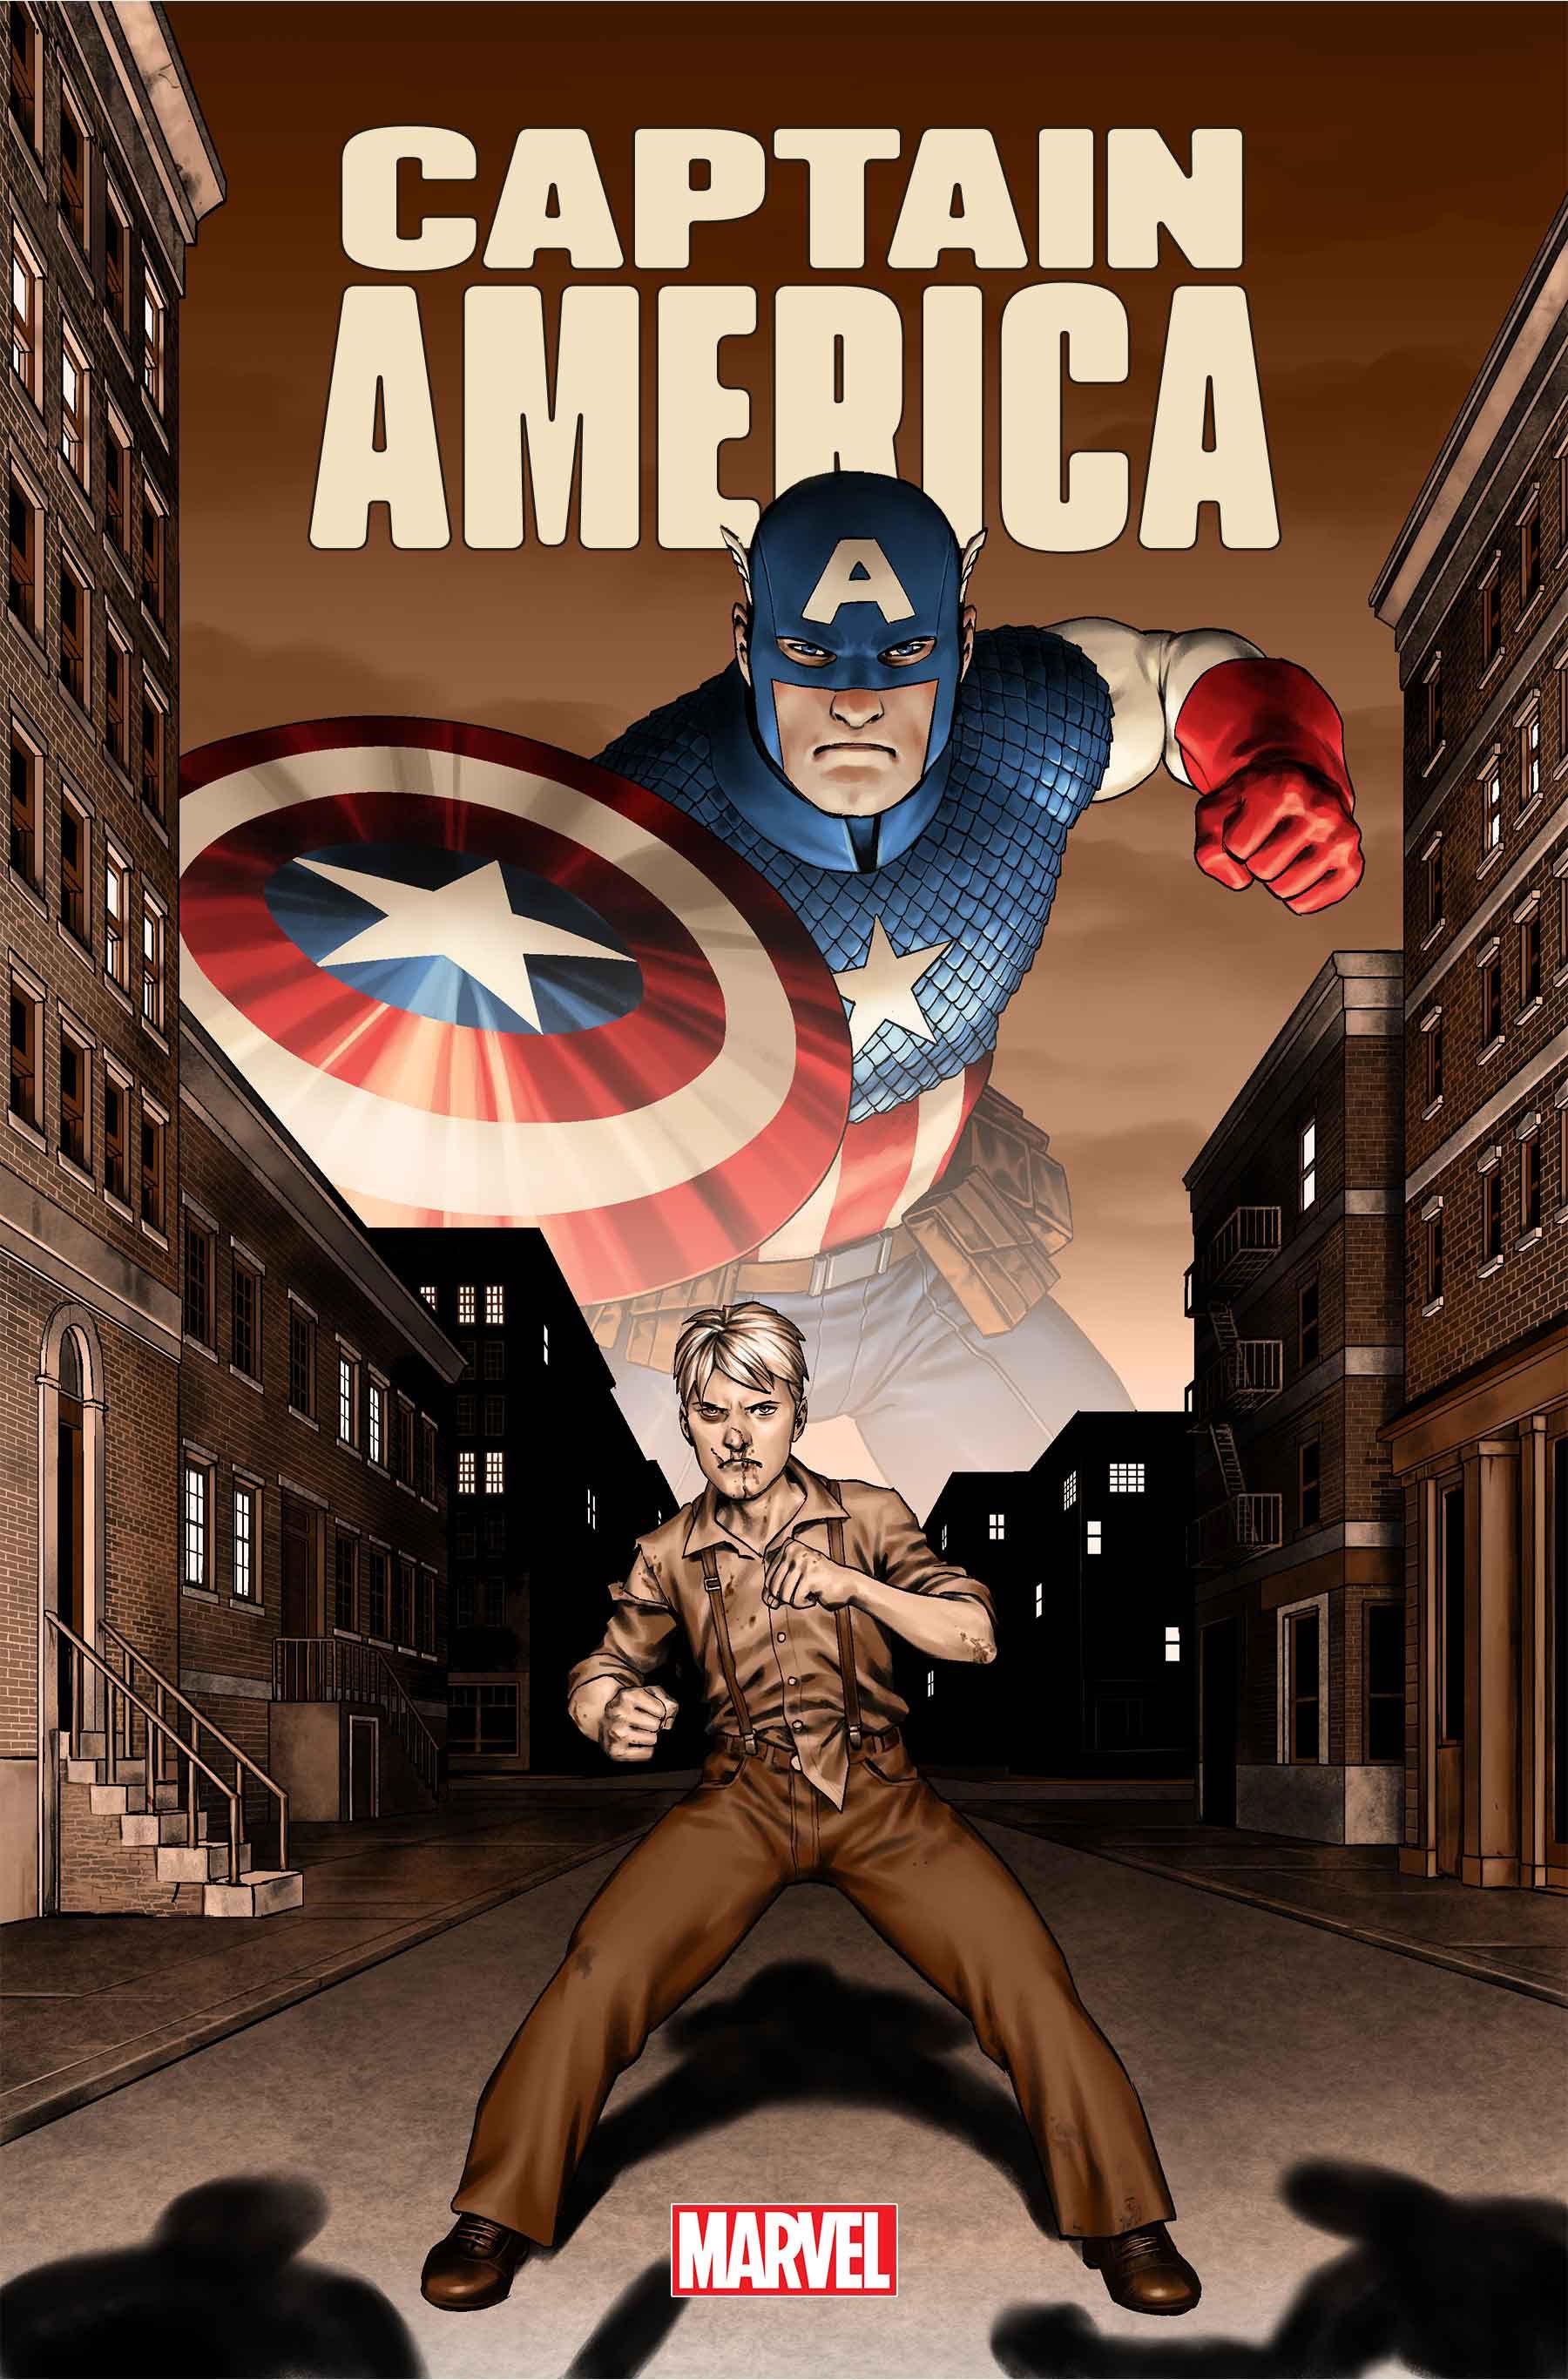 Captain America headlines a new Marvel reboot series this September.